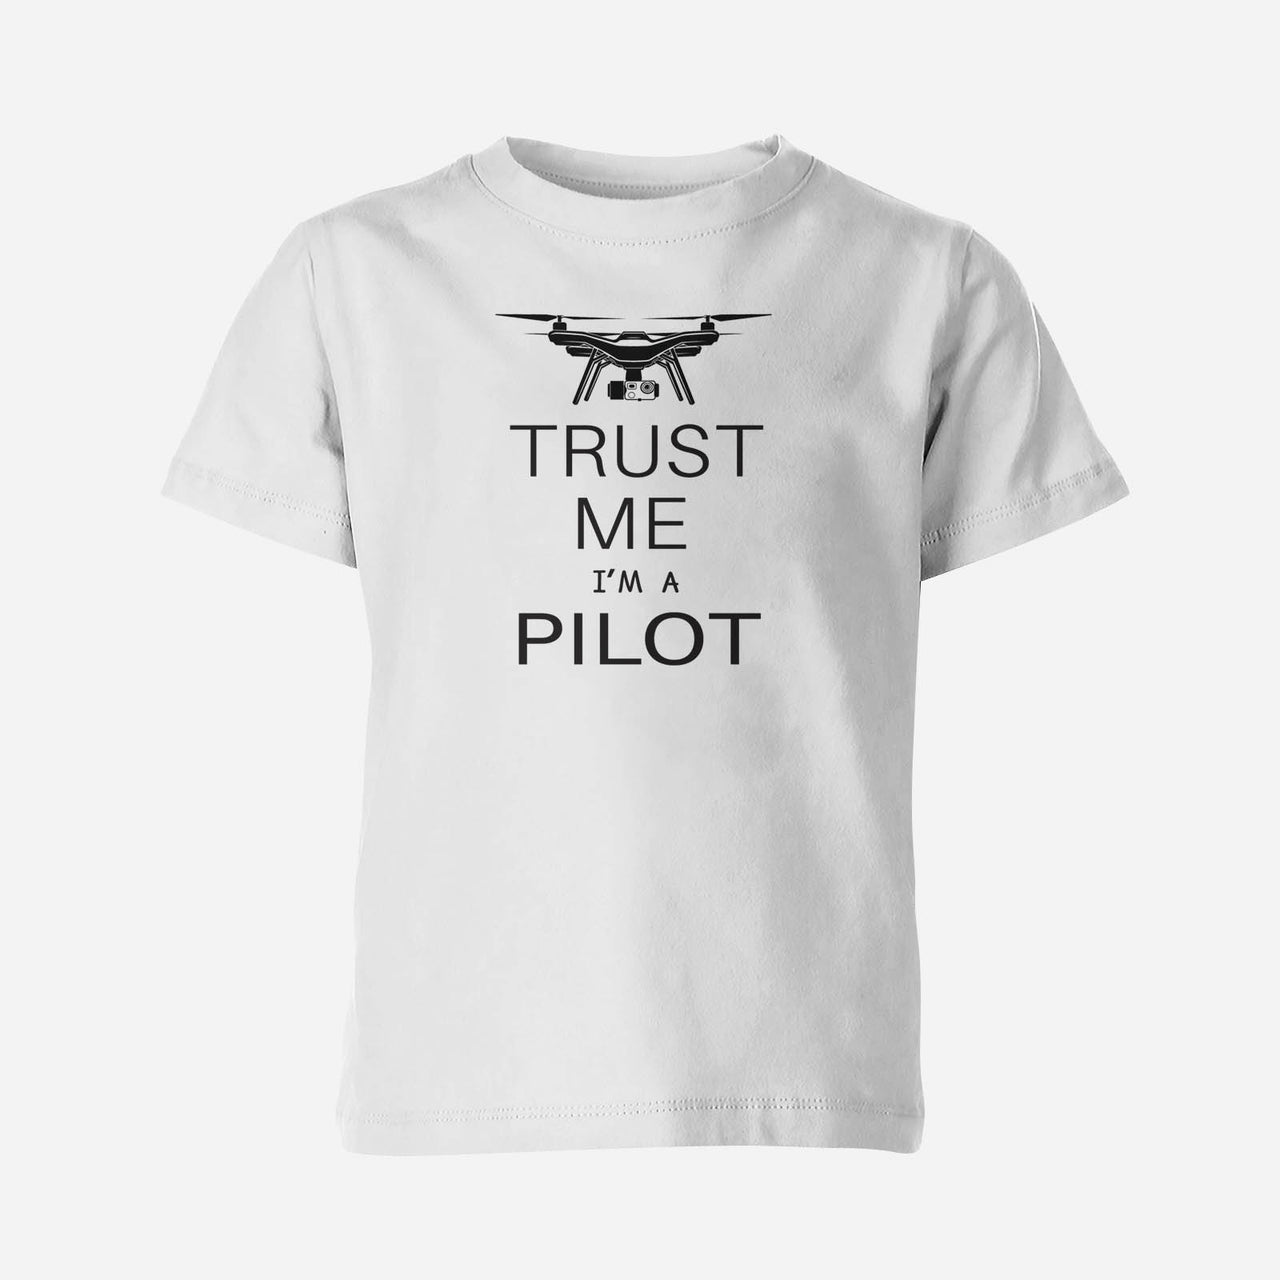 Trust Me I'm a Pilot (Drone) Designed Children T-Shirts